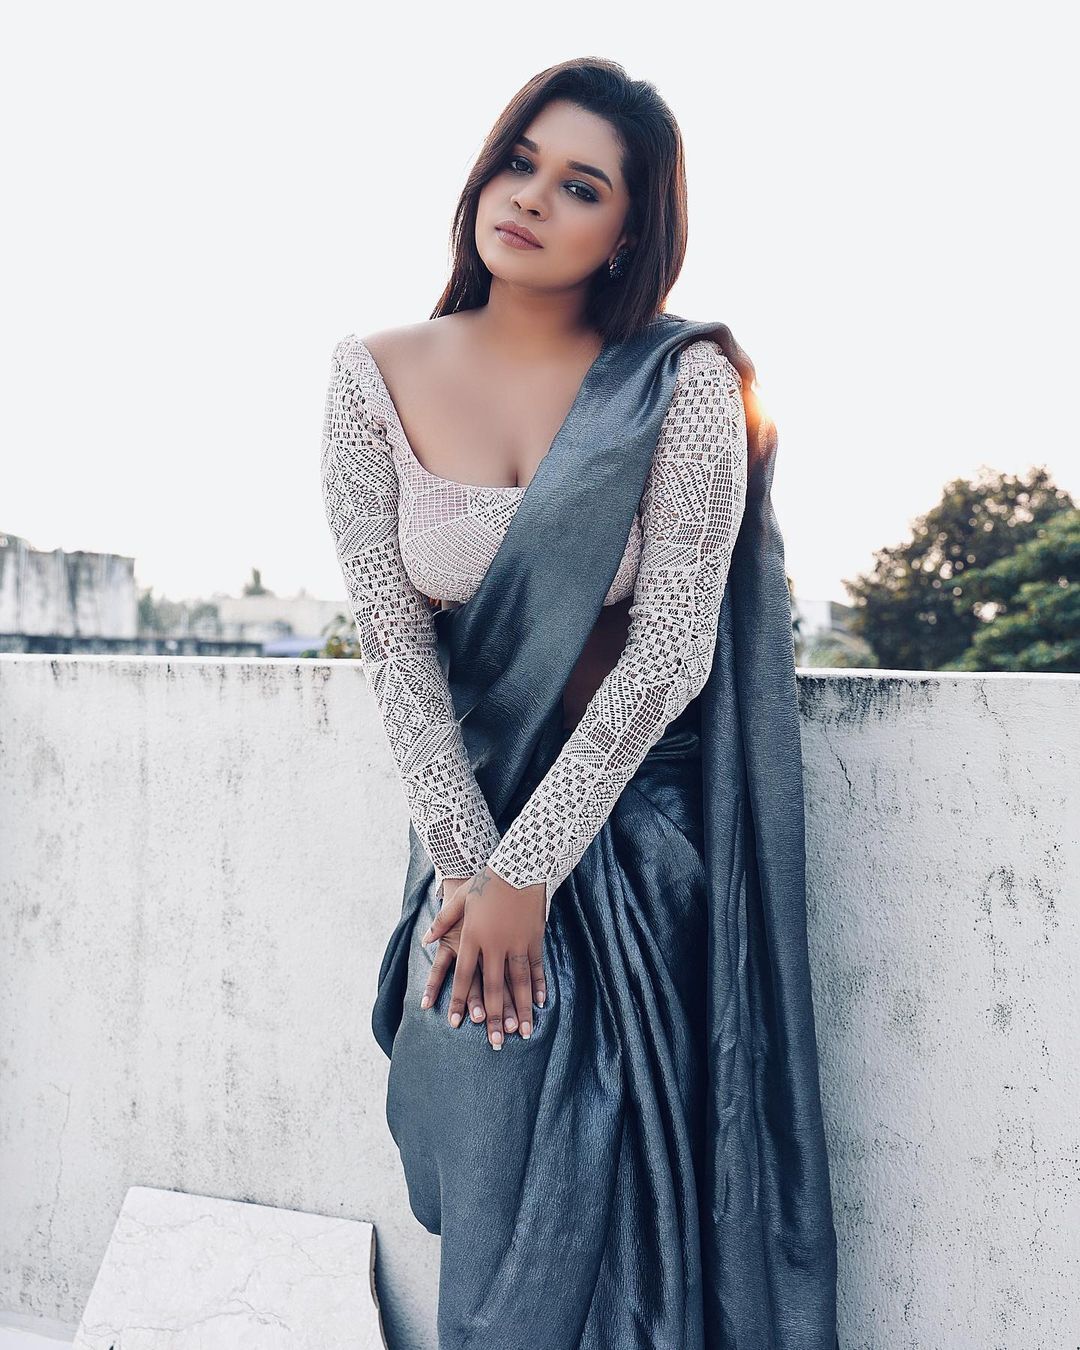 Veena Jessi started her film career in modelling